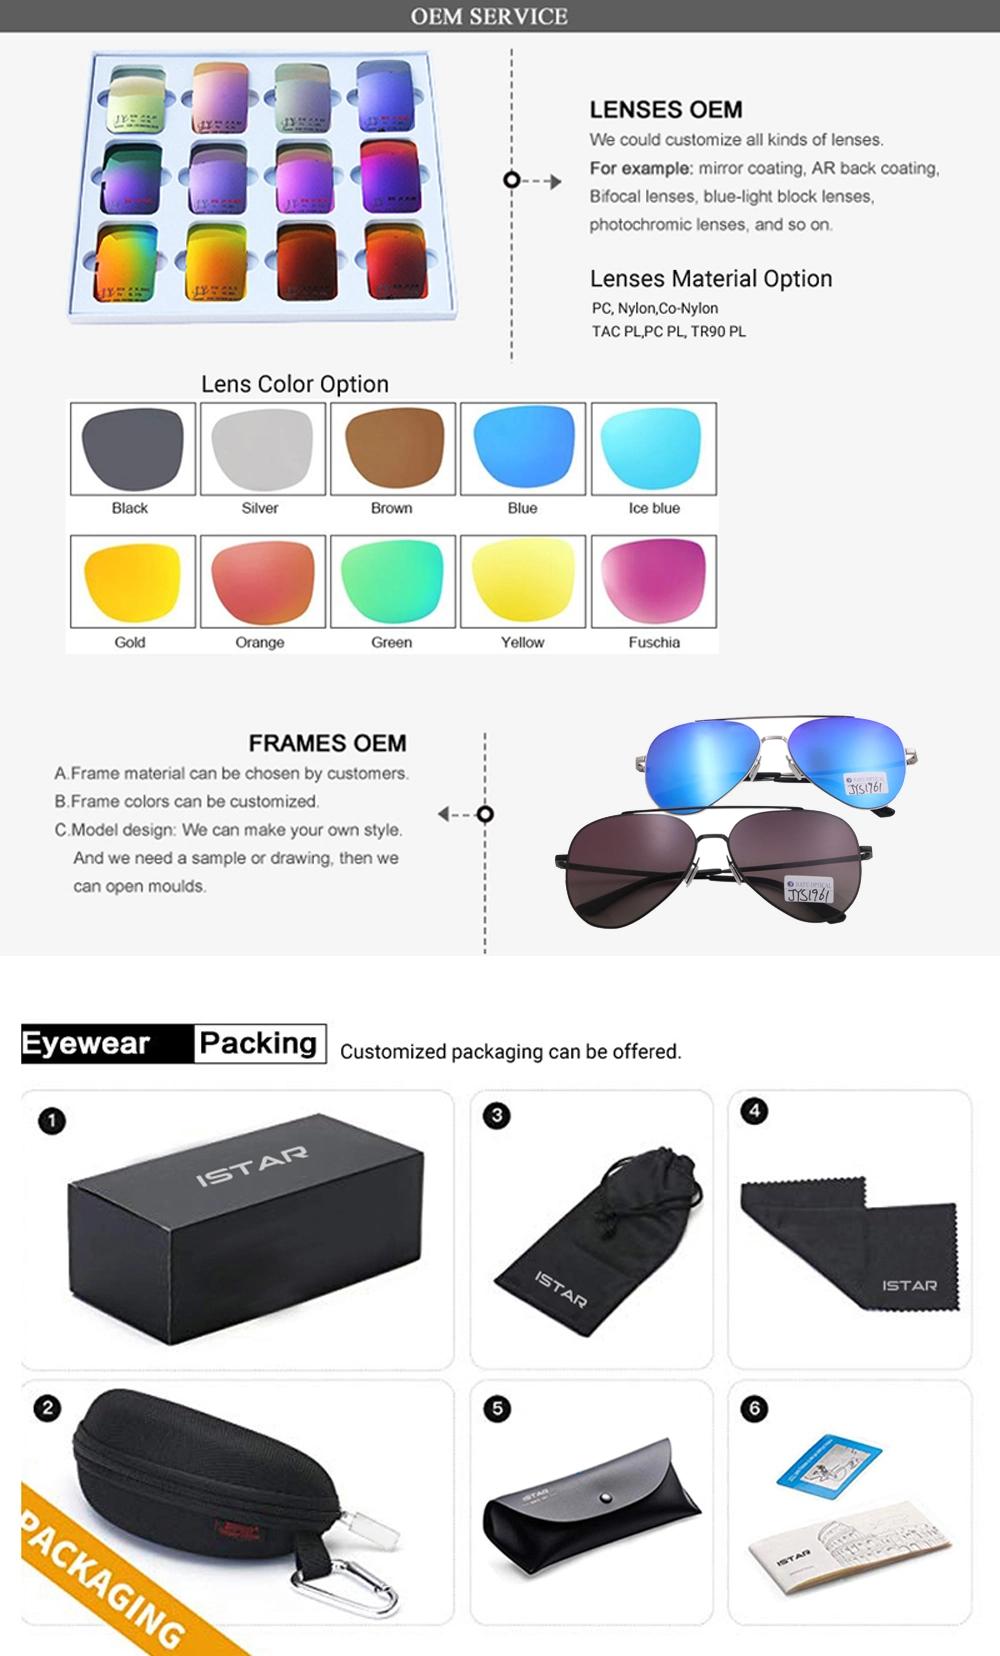 Wholesale Polarized Metal Square Italian Eyewear Brands Custom Men Sunglasses